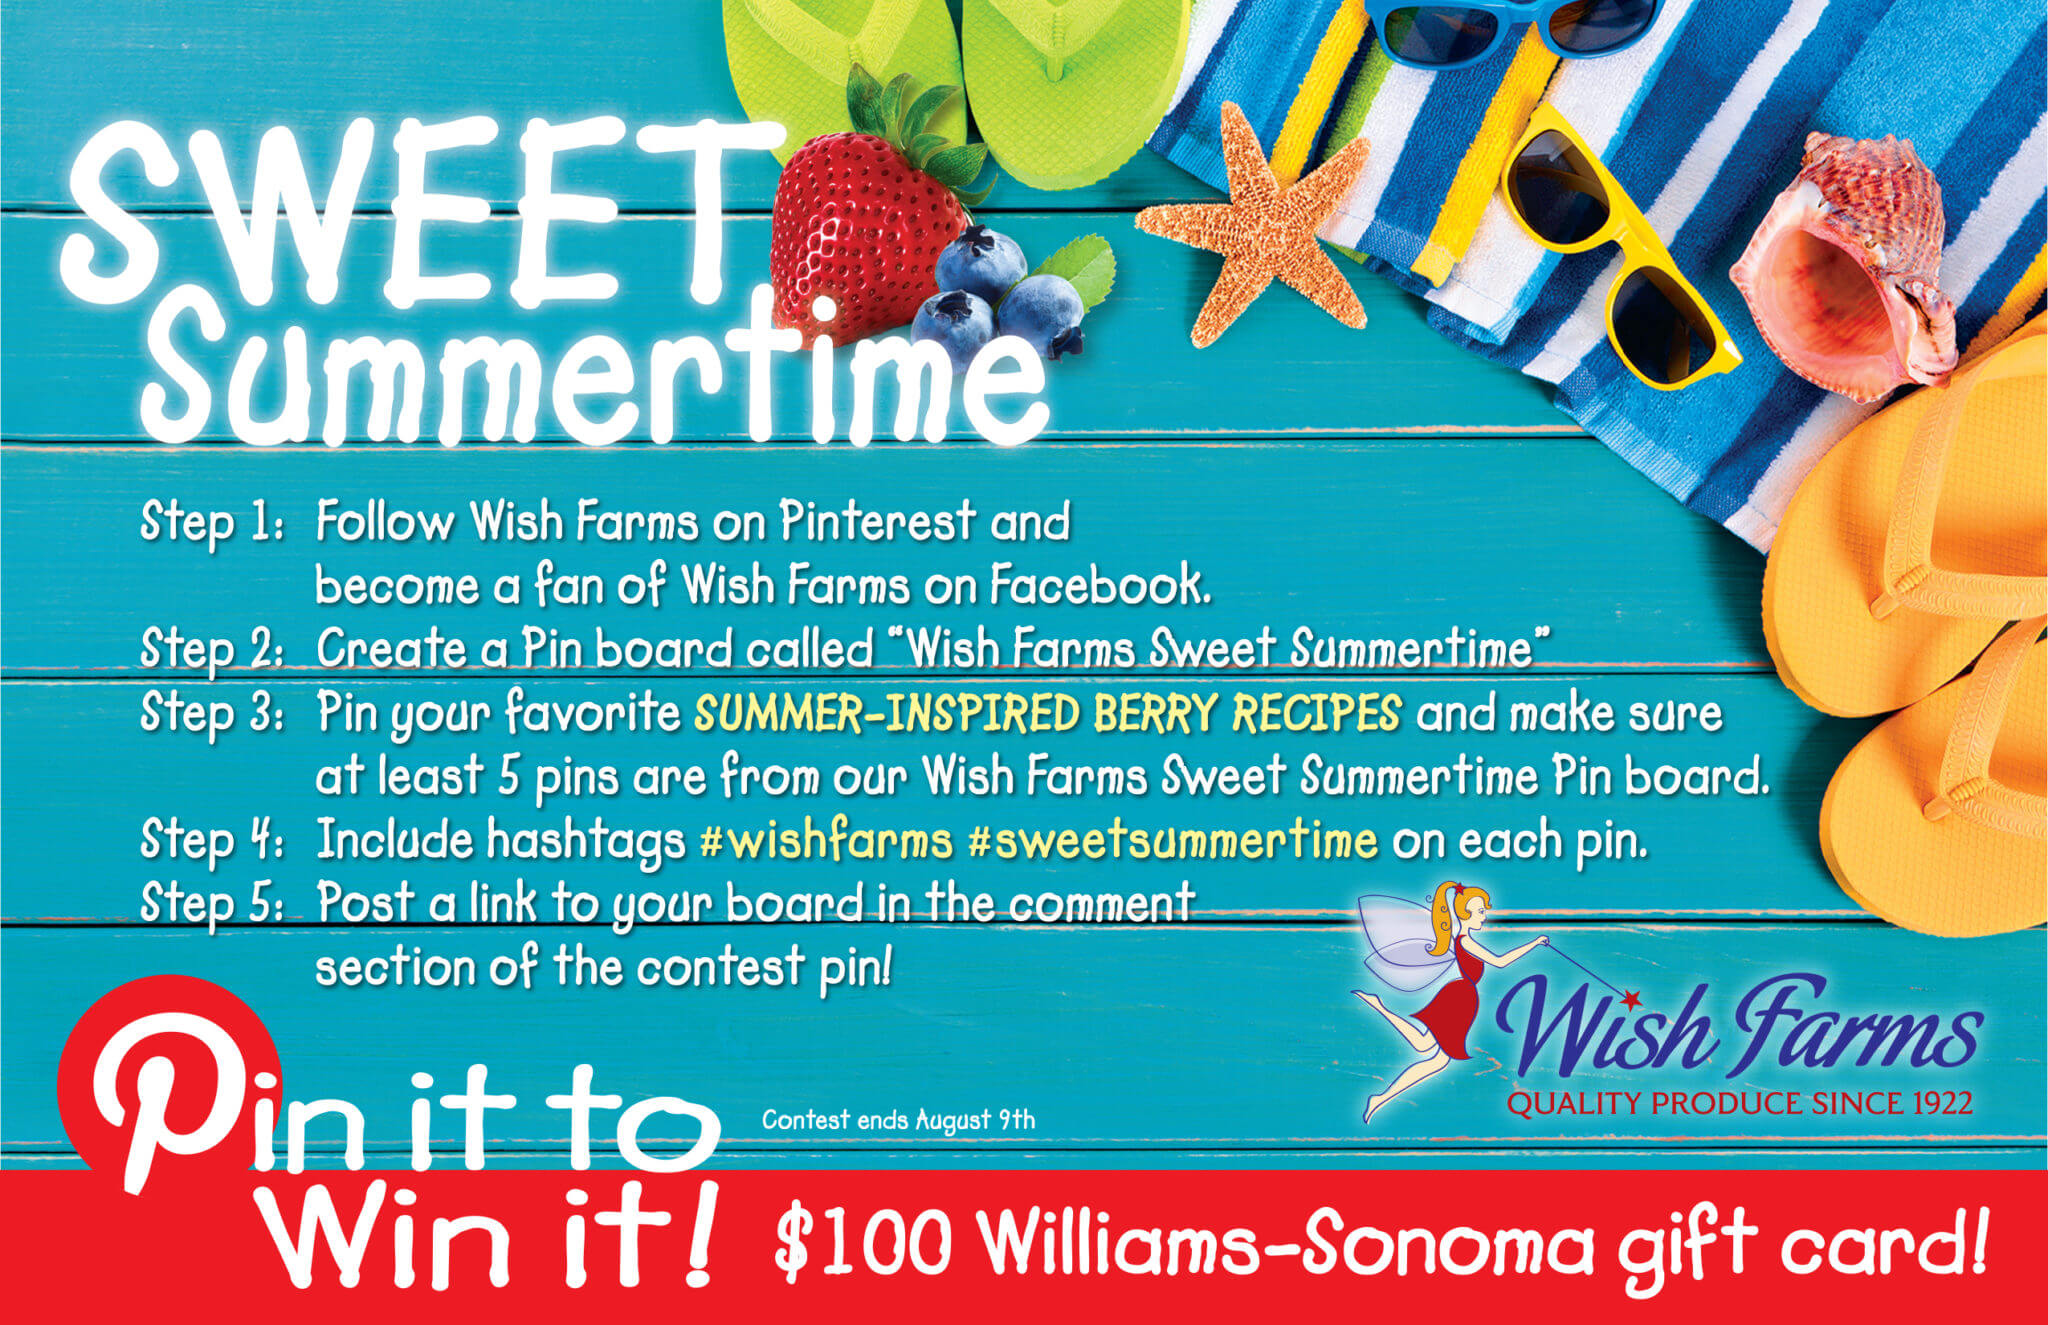 #SweetSummertime #wishfarms #pin2win